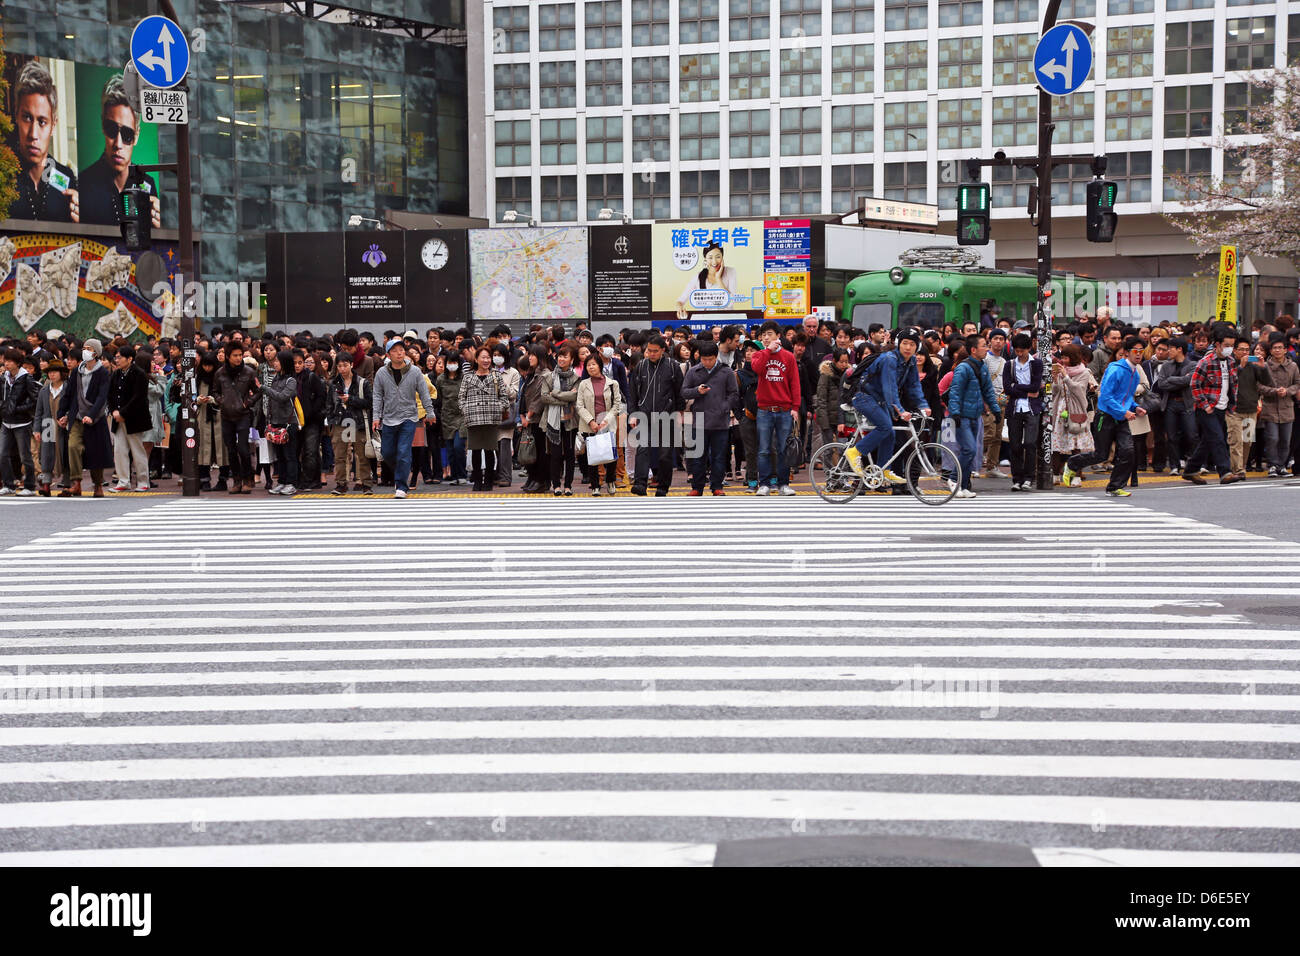 Japanese street scene showing crowds of people crossing the street on a pedestrian crossing in Shibuya, Tokyo, Japan Stock Photo